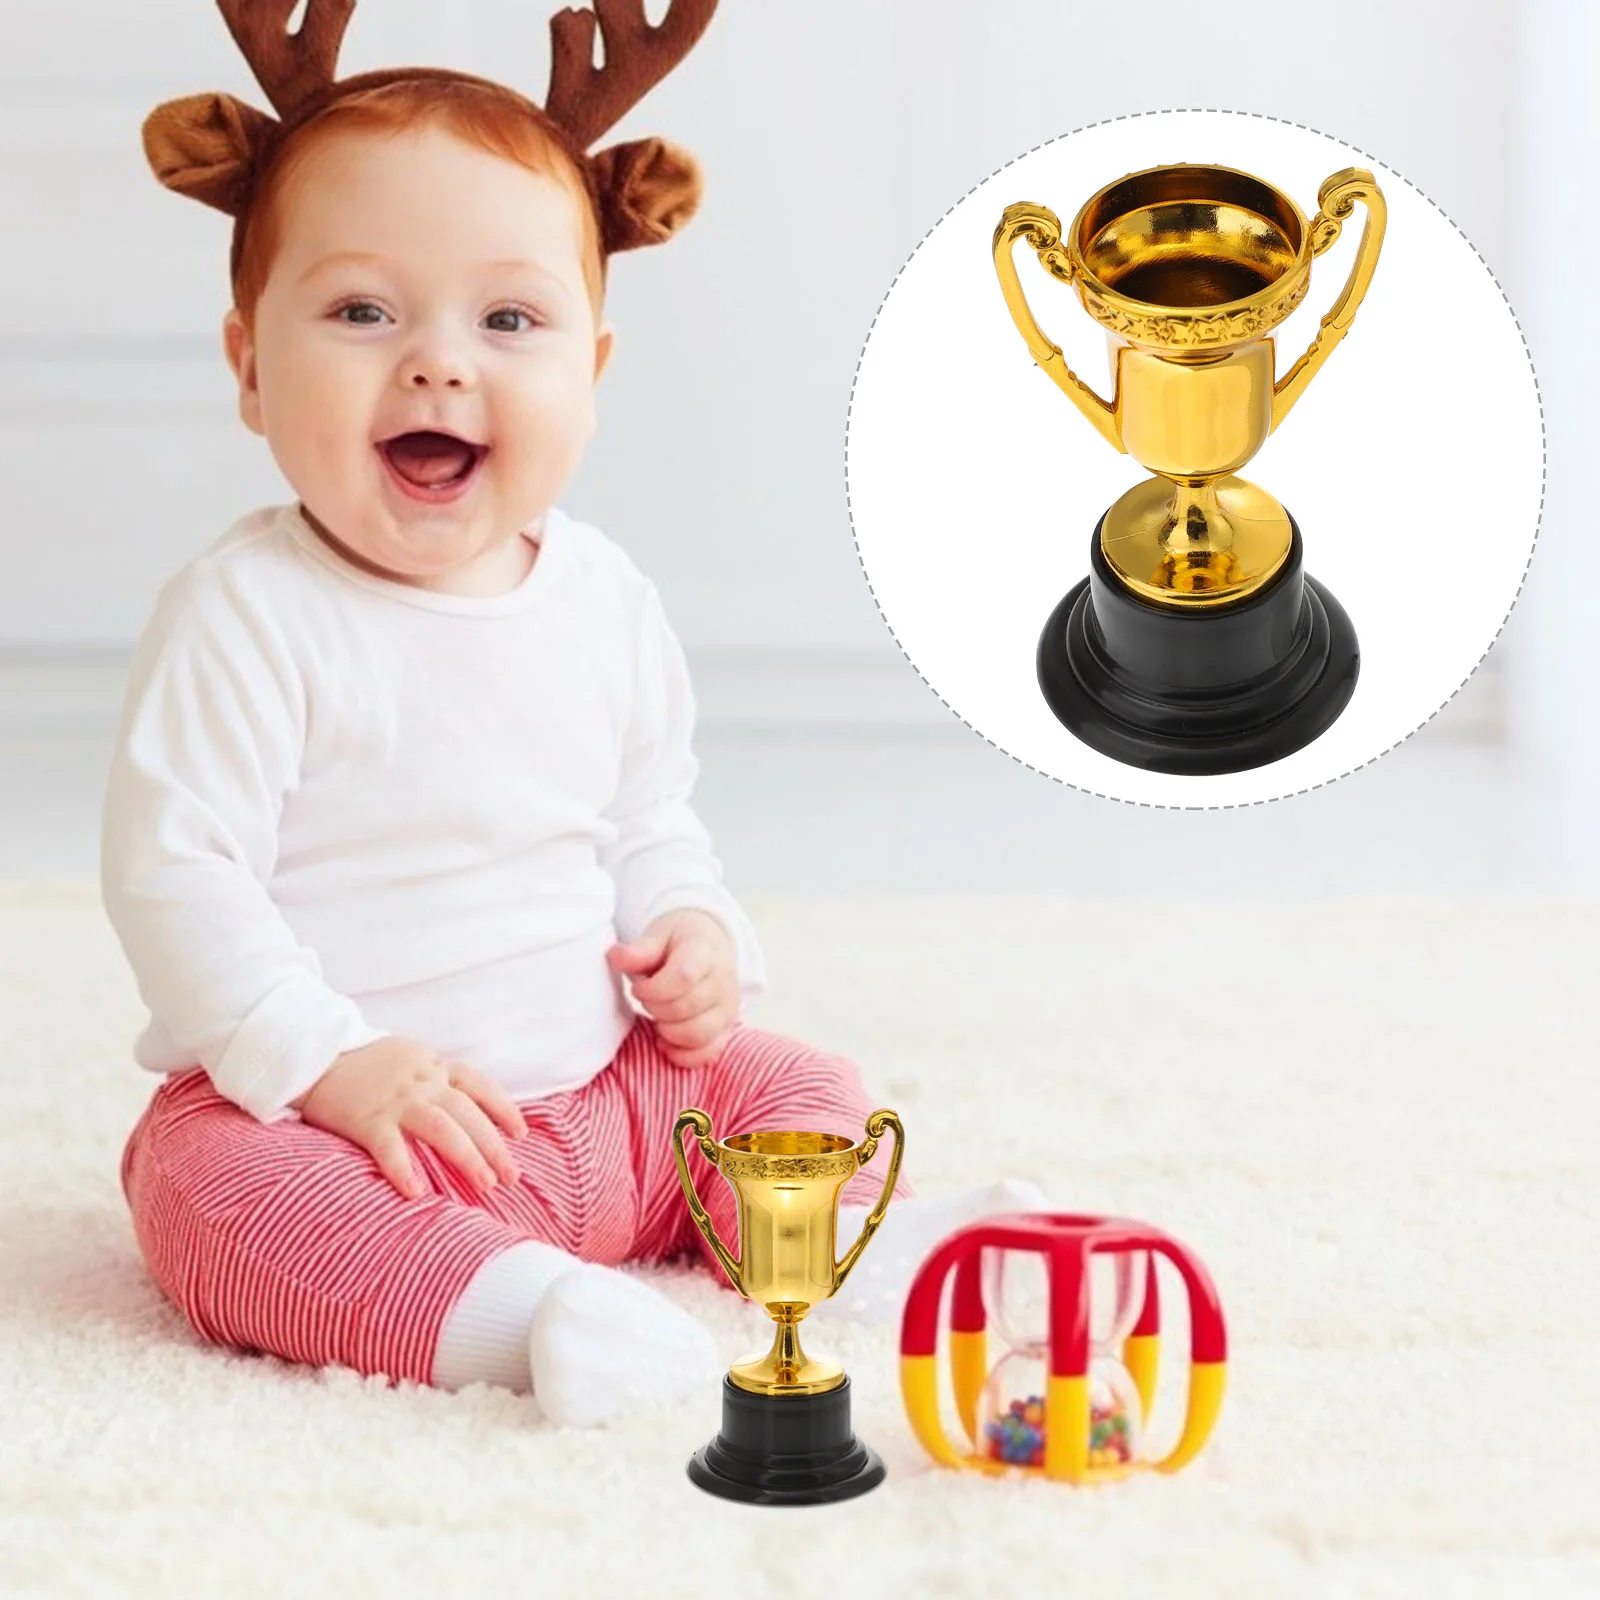 20 Pcs Reward Trophy Cup Educational Toys Kids Award Football Sports Trophies Medal Plastic Gold Prizes